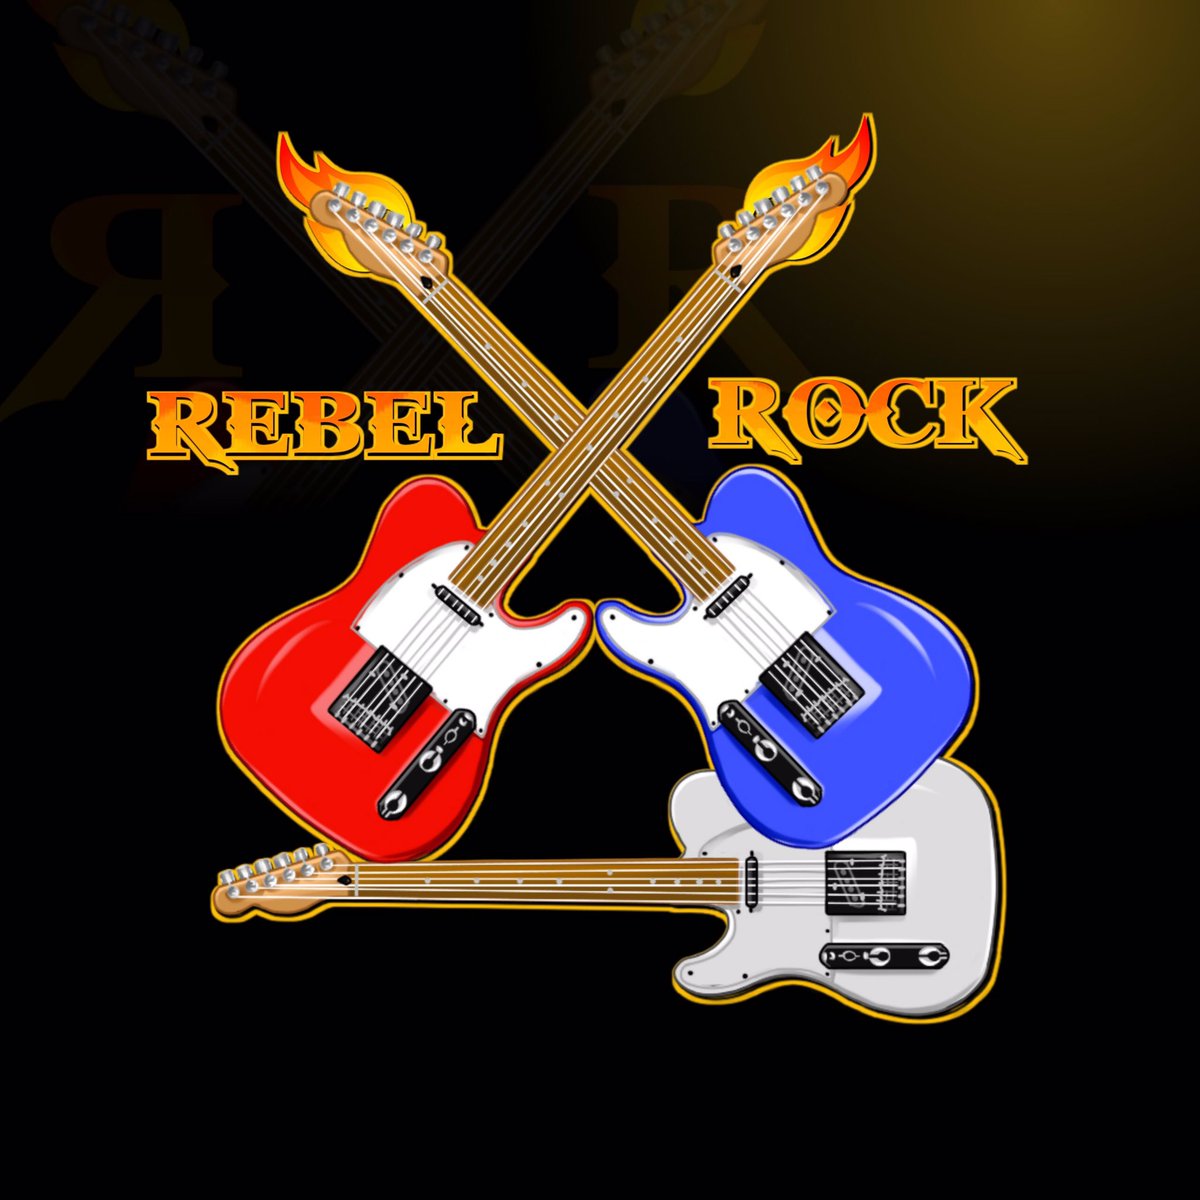 Play.radioking.com/radio/rebelroc… 
Classic rock on the internet. Rebel Rock Radio